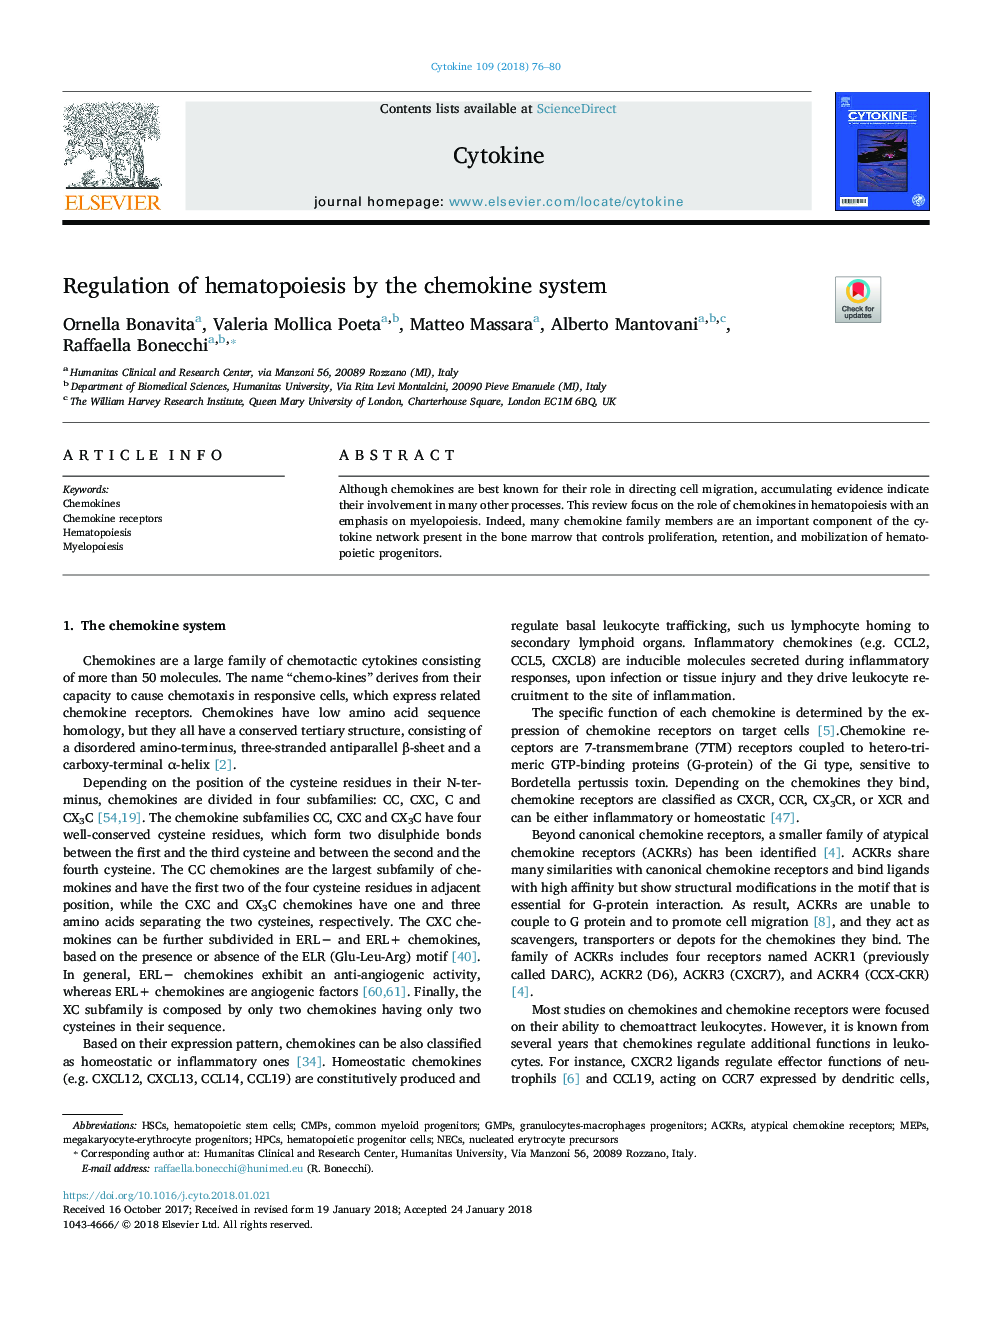 Regulation of hematopoiesis by the chemokine system